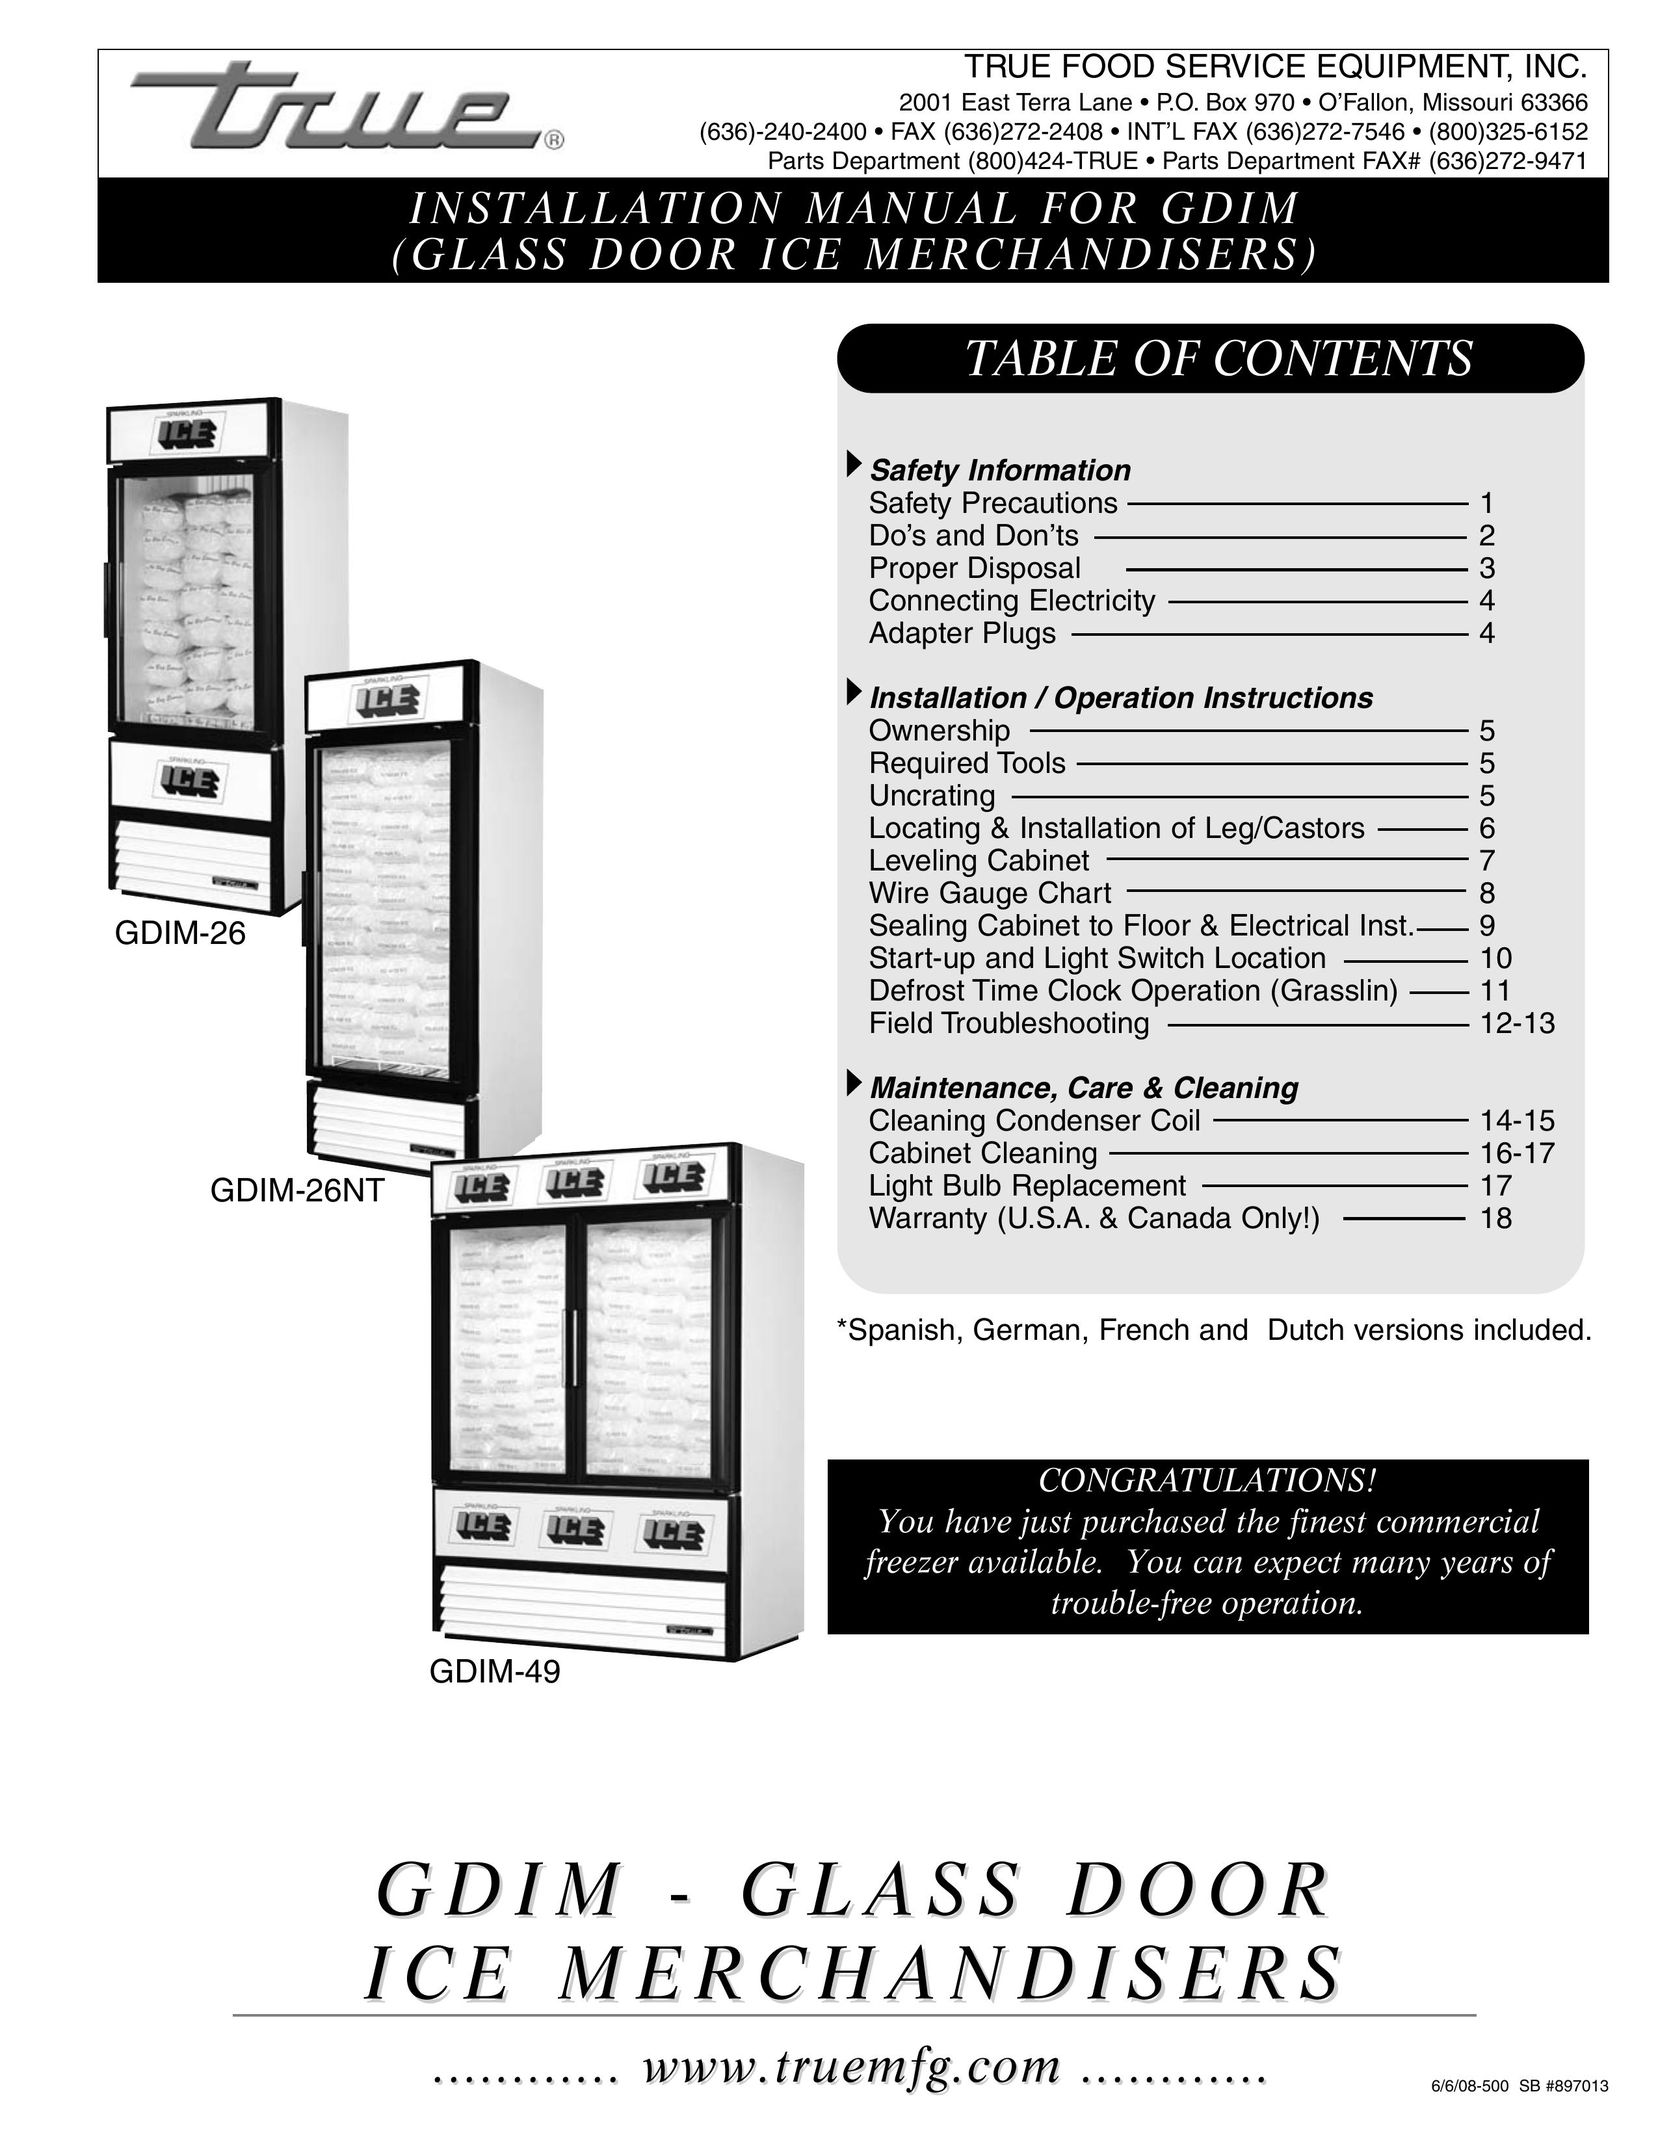 True Manufacturing Company GDIM-26 Freezer User Manual